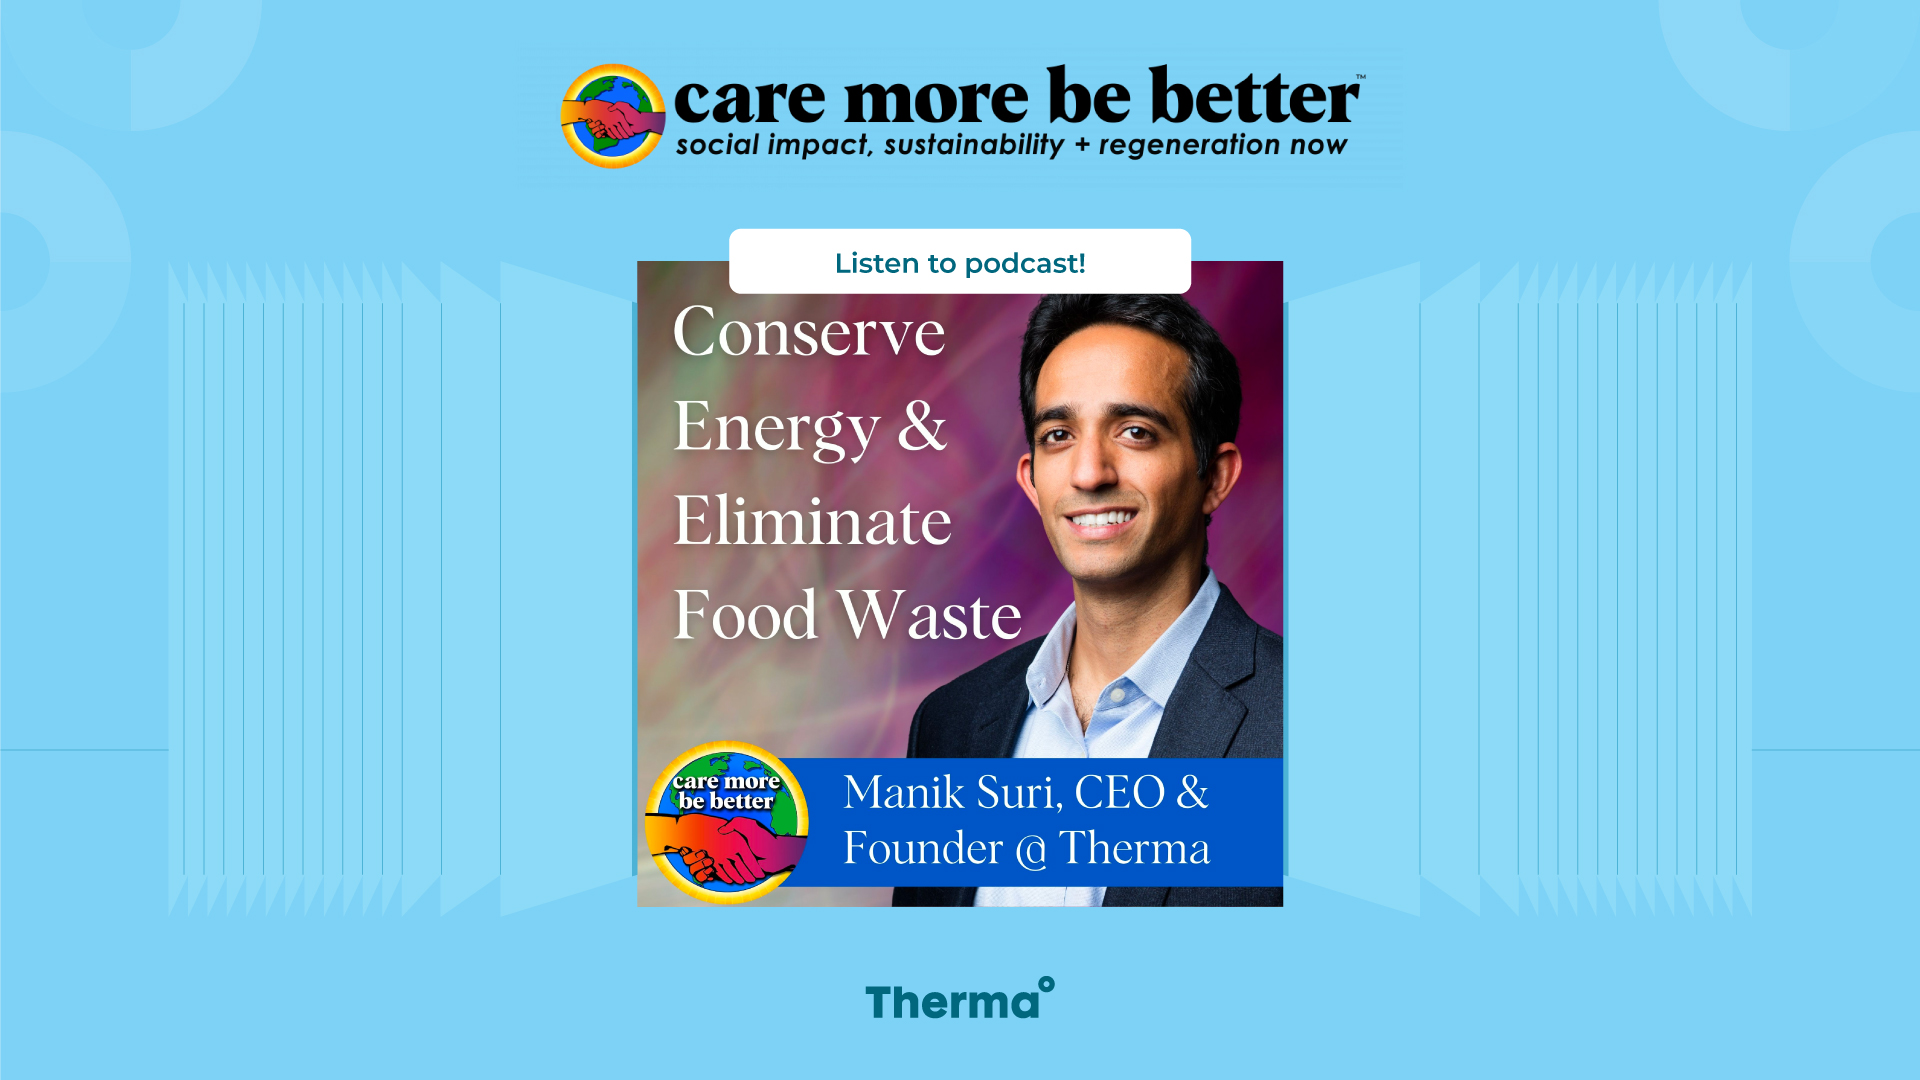 Manik Suri on care more be better podcast